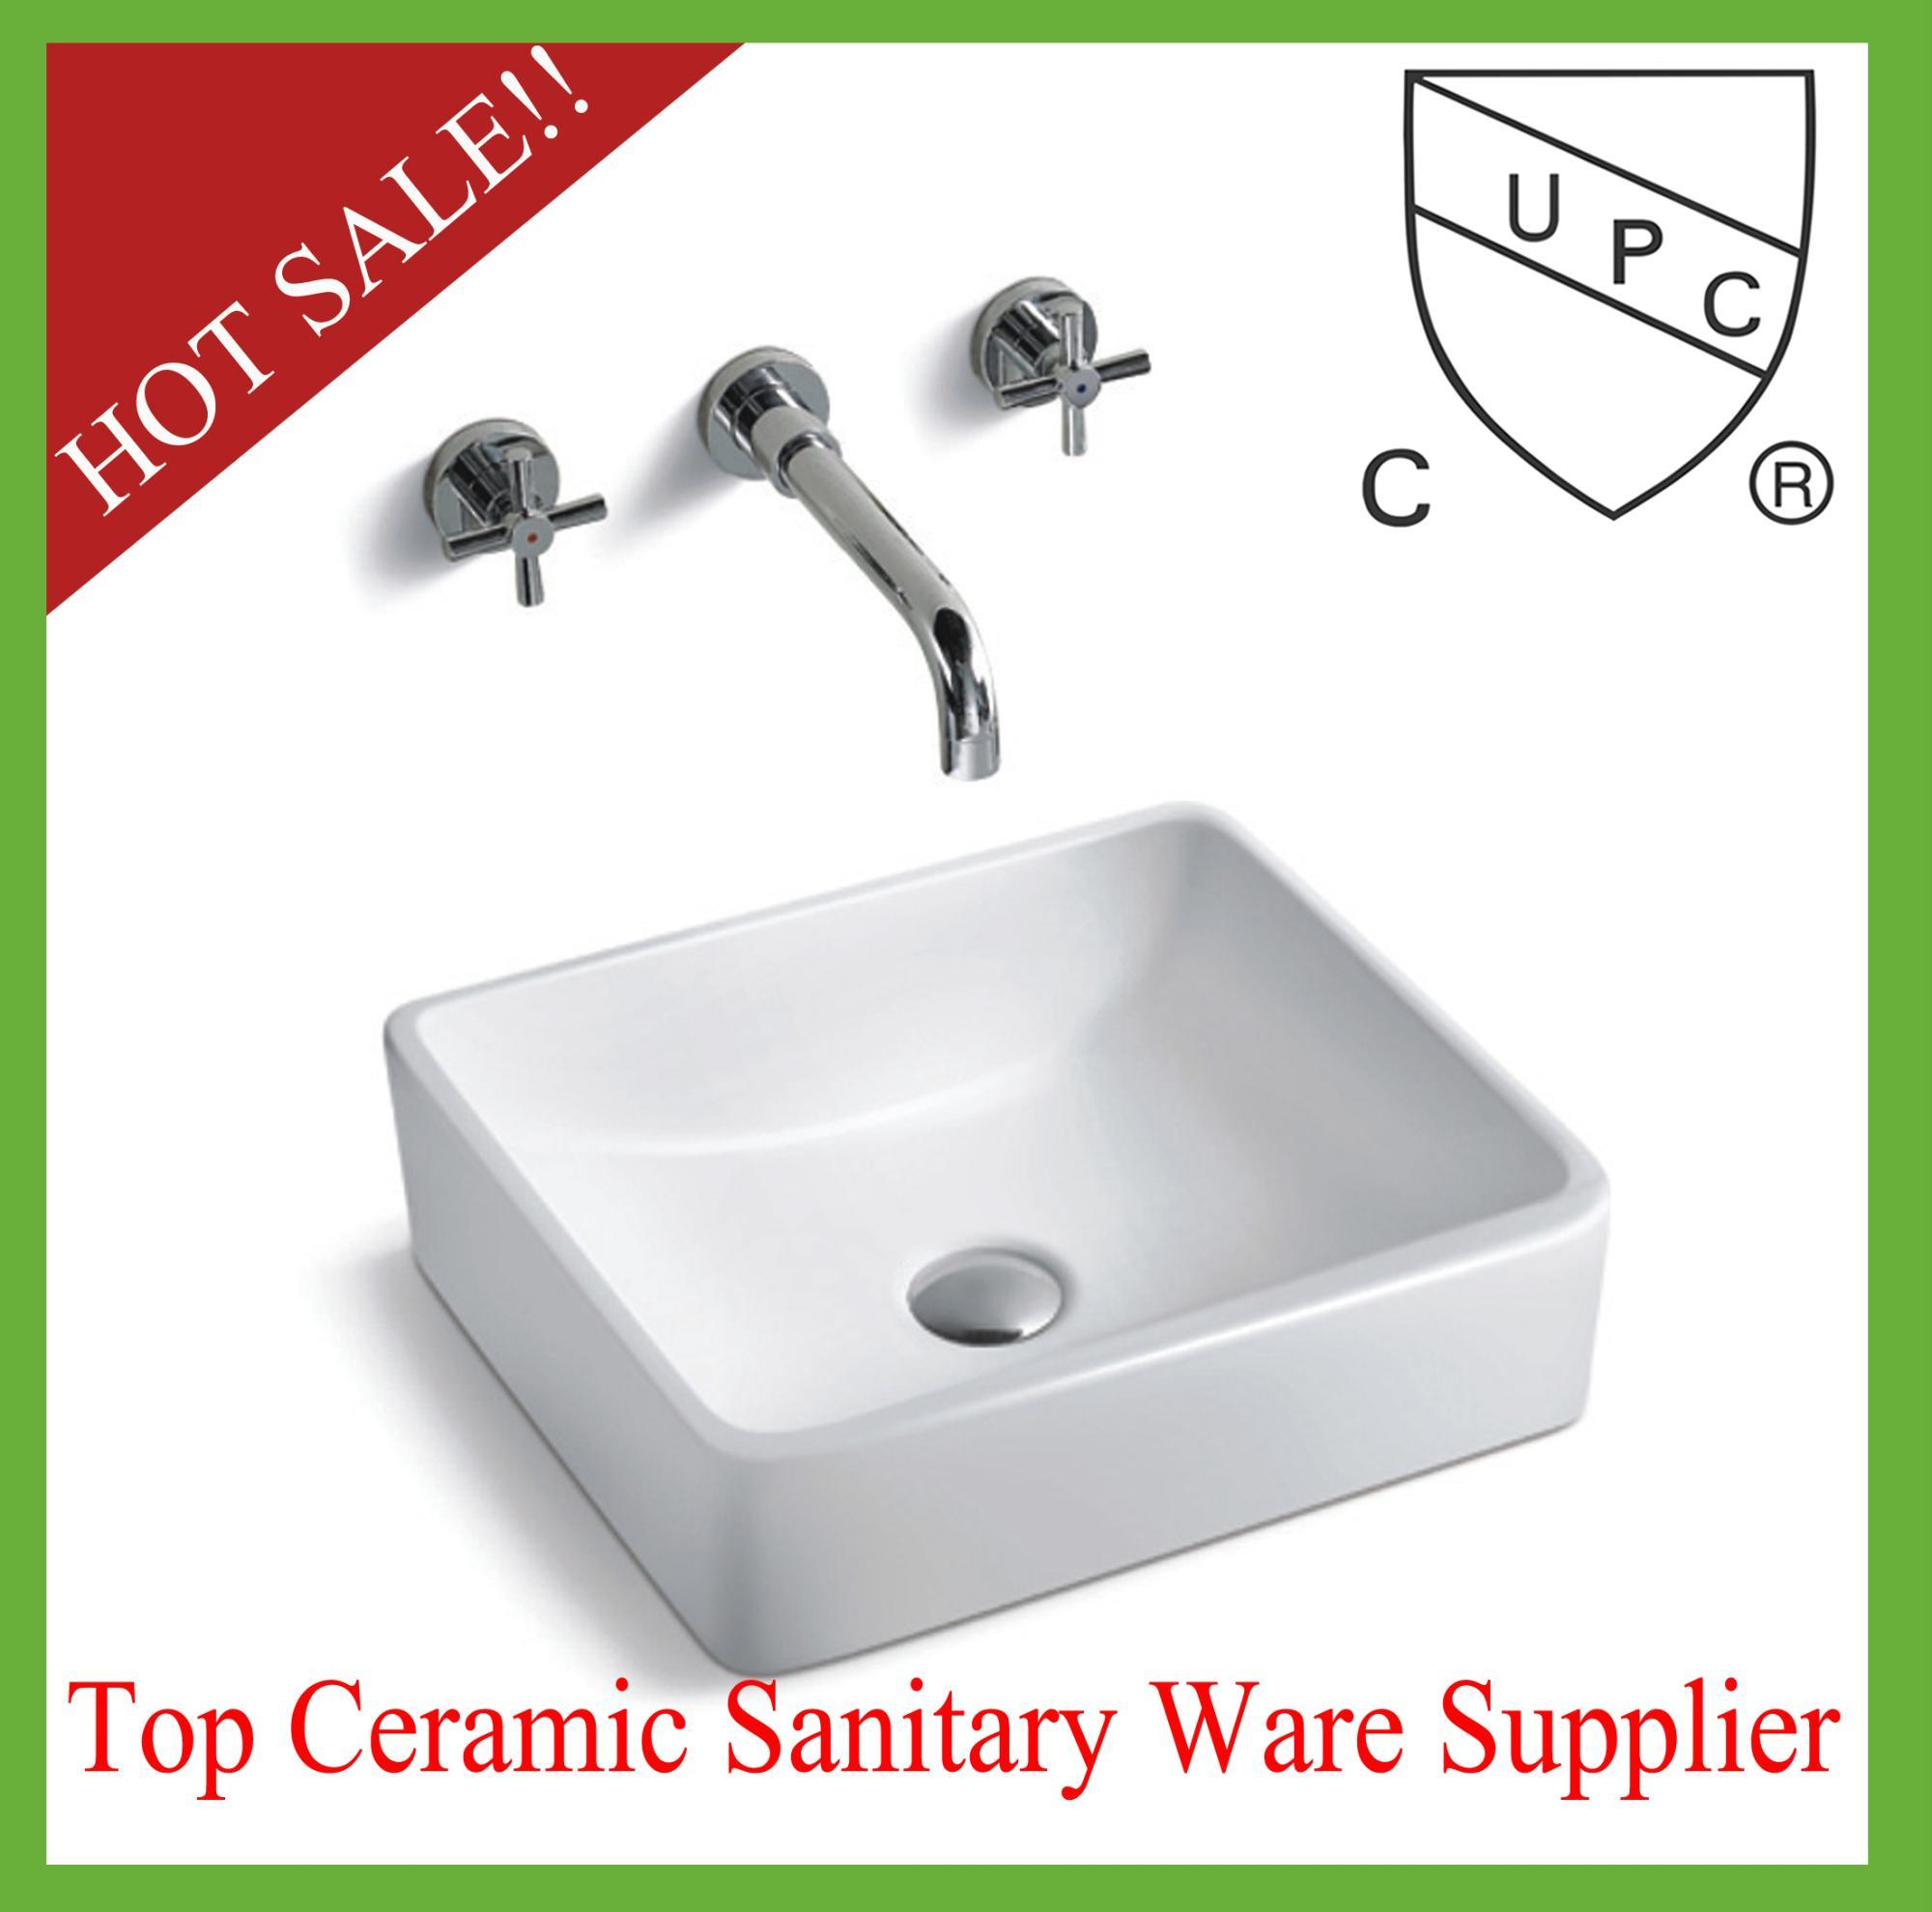 Classical Bathroom Ceramic Wash Basin (S1000)